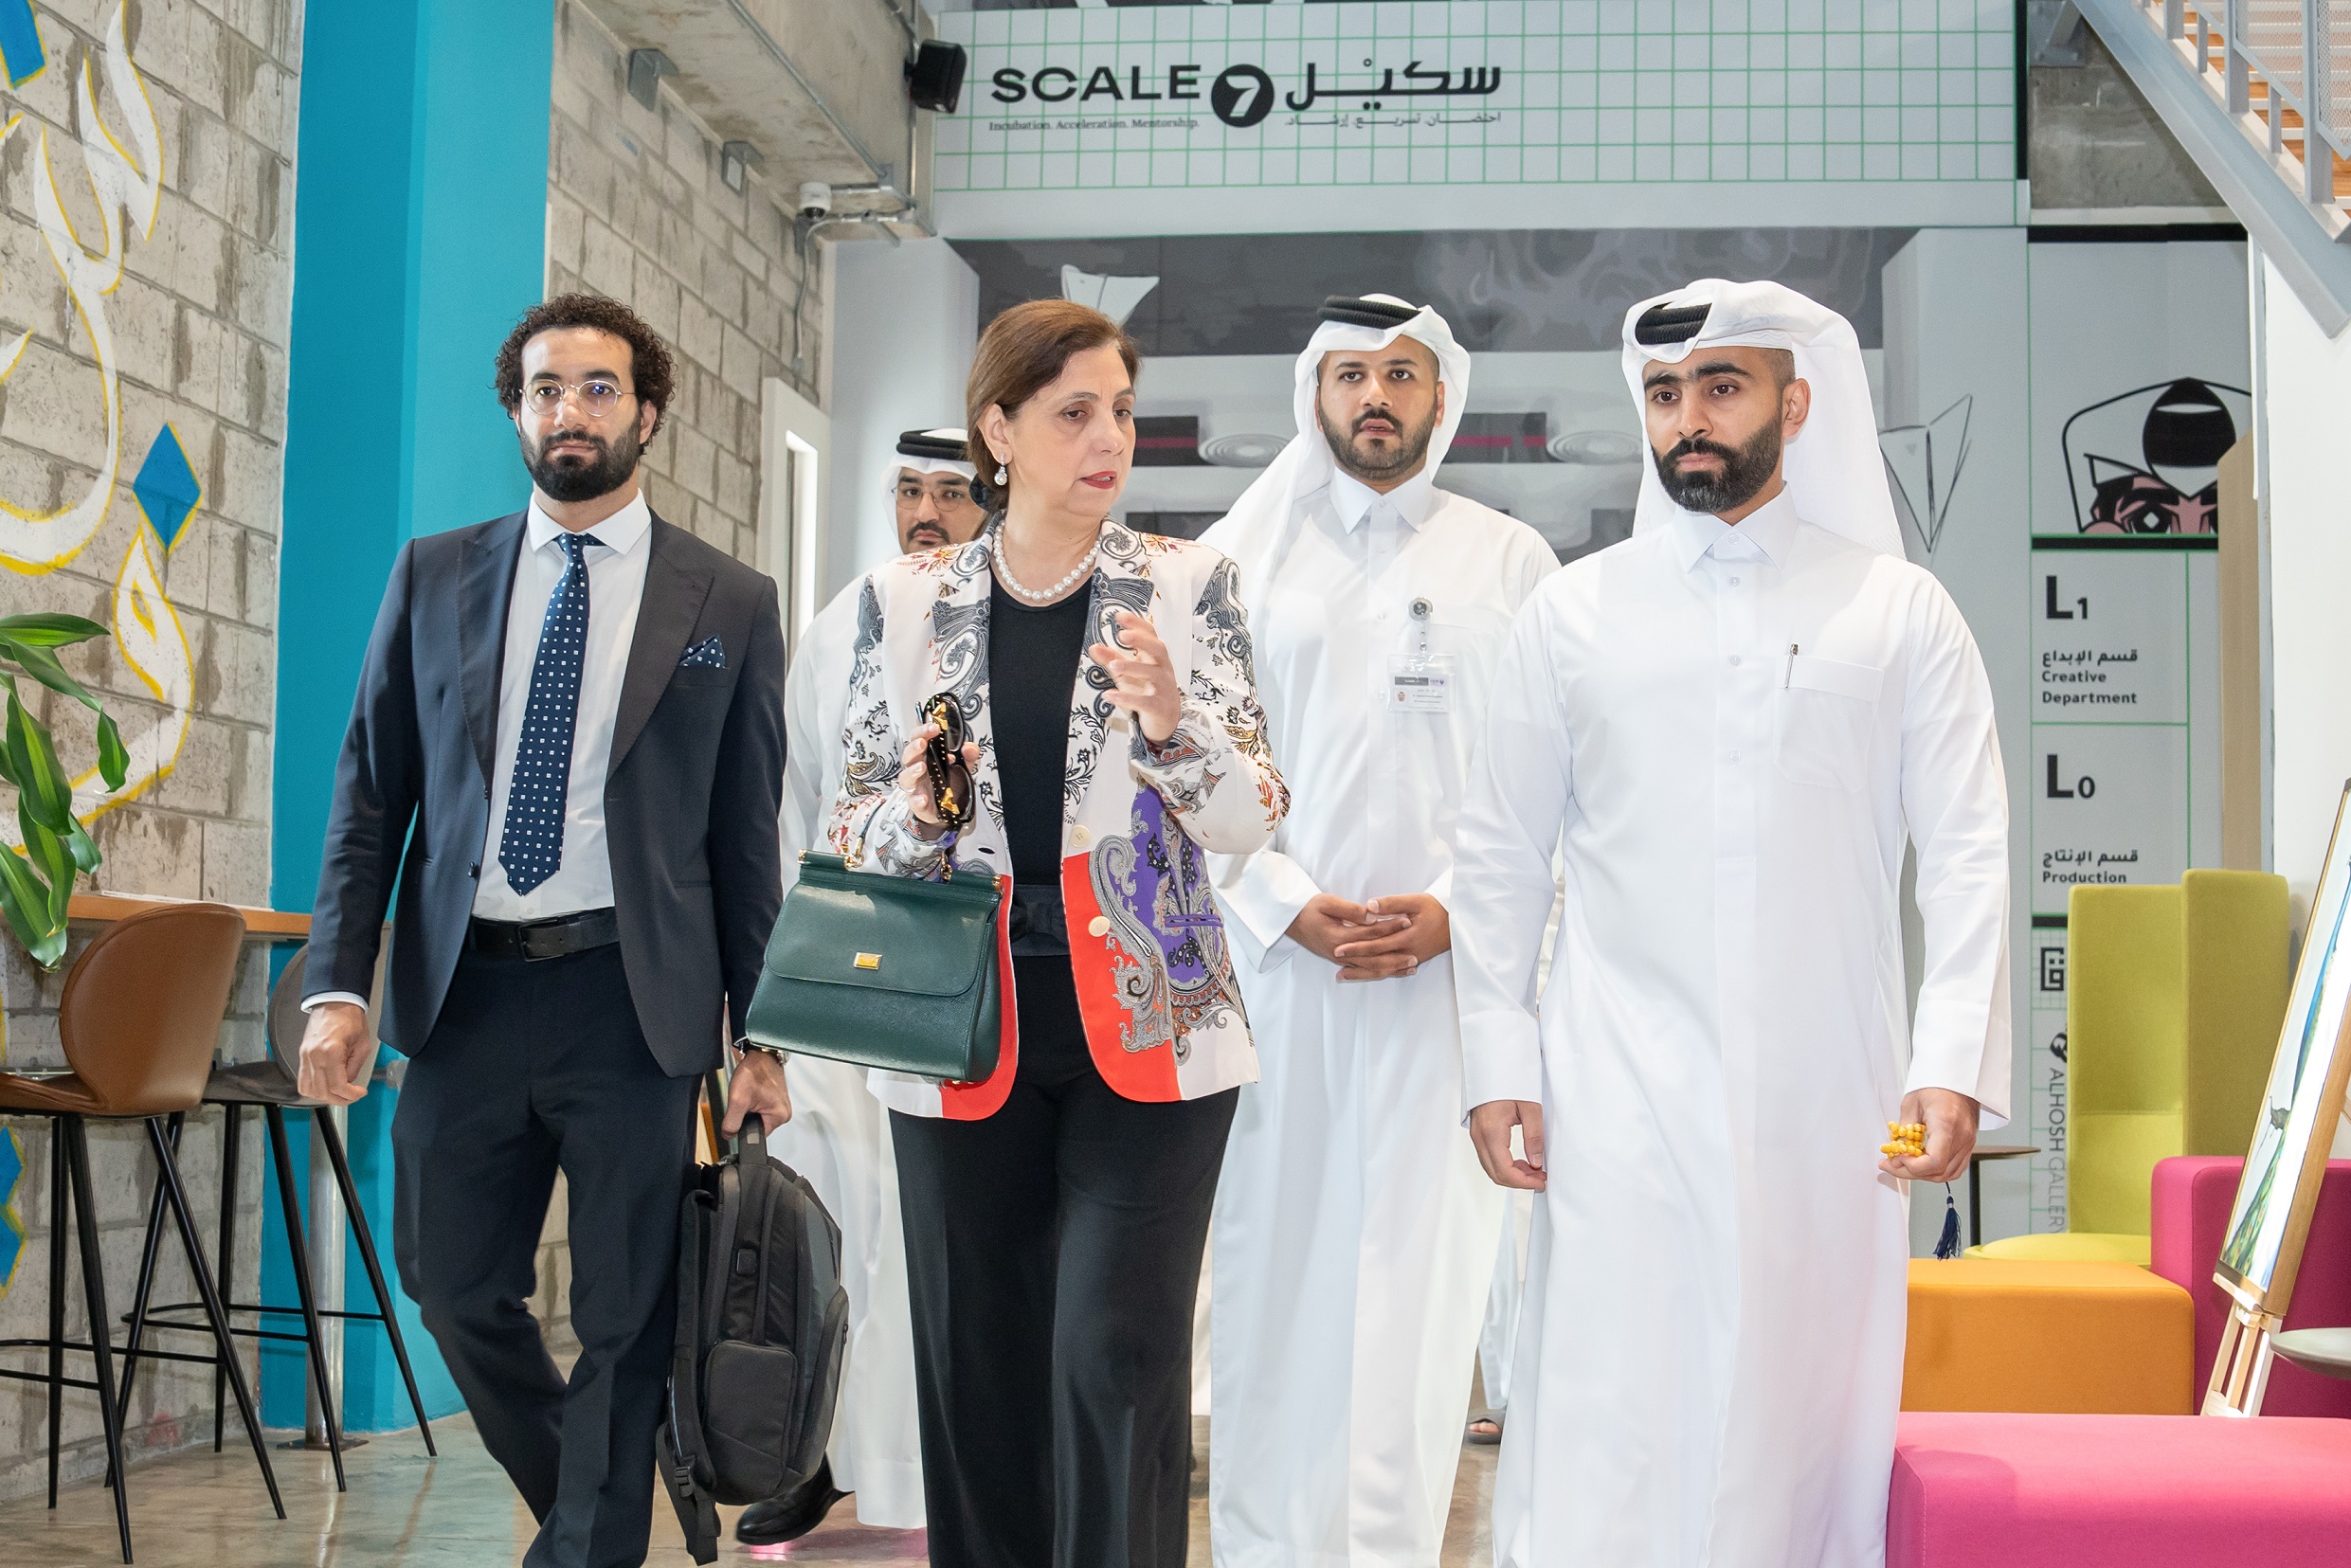 ESCWA signs MoU with Qatar Development Bank on hosting third Arab SMEs Summit